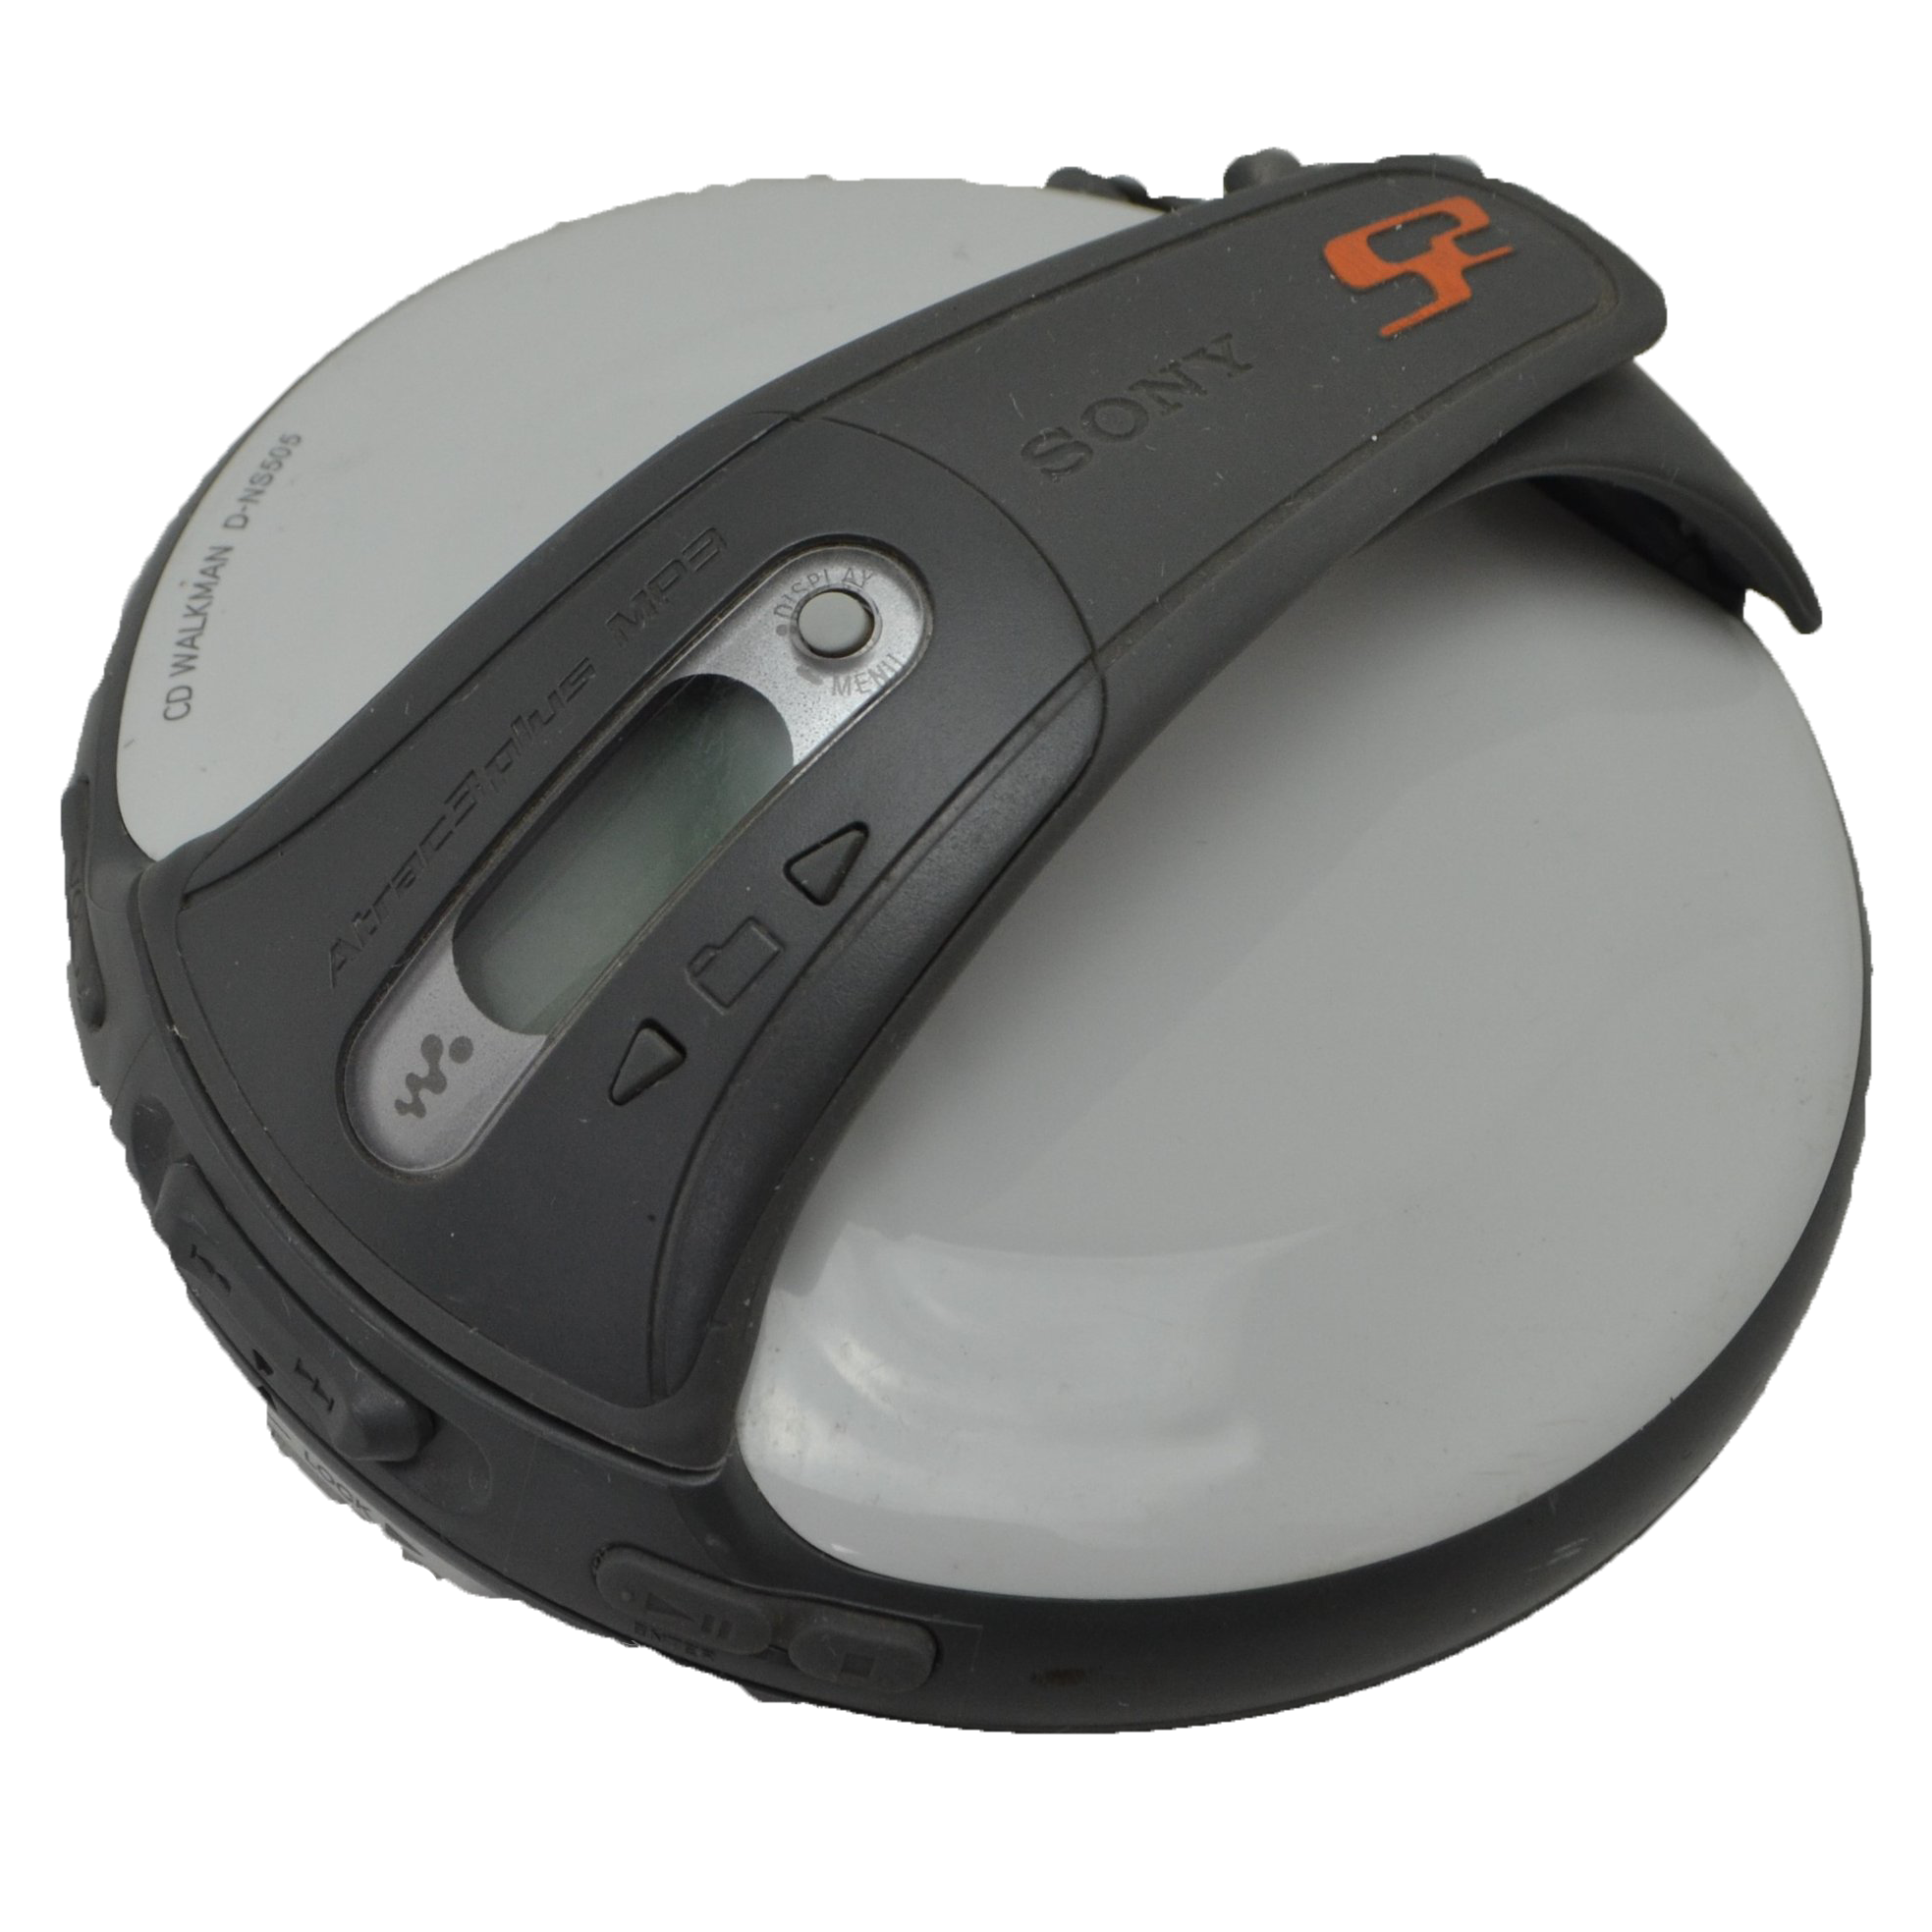 Sony CD Walkman Player White Water Resistant Atrac3plus MP3 (D-NS505)